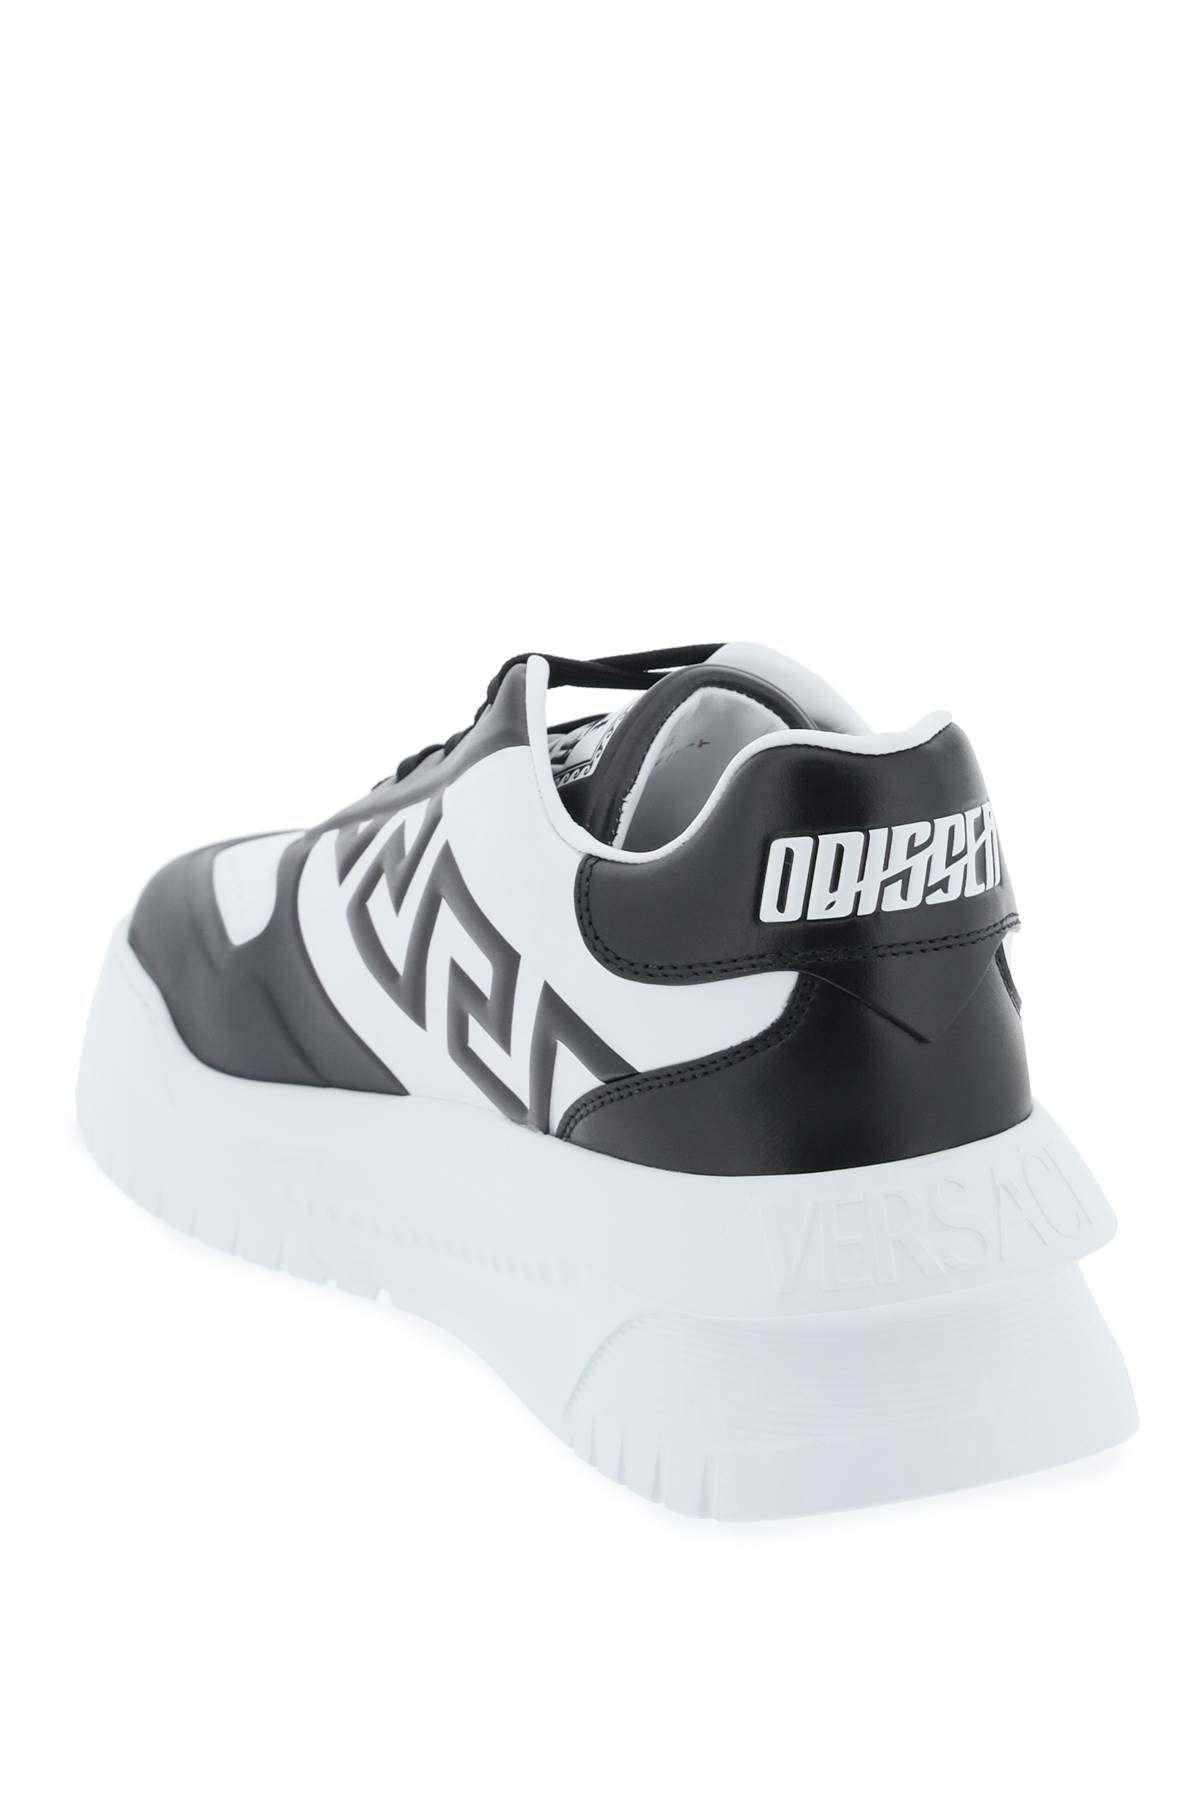 Shop Versace Odissea Sneakers In White, Black